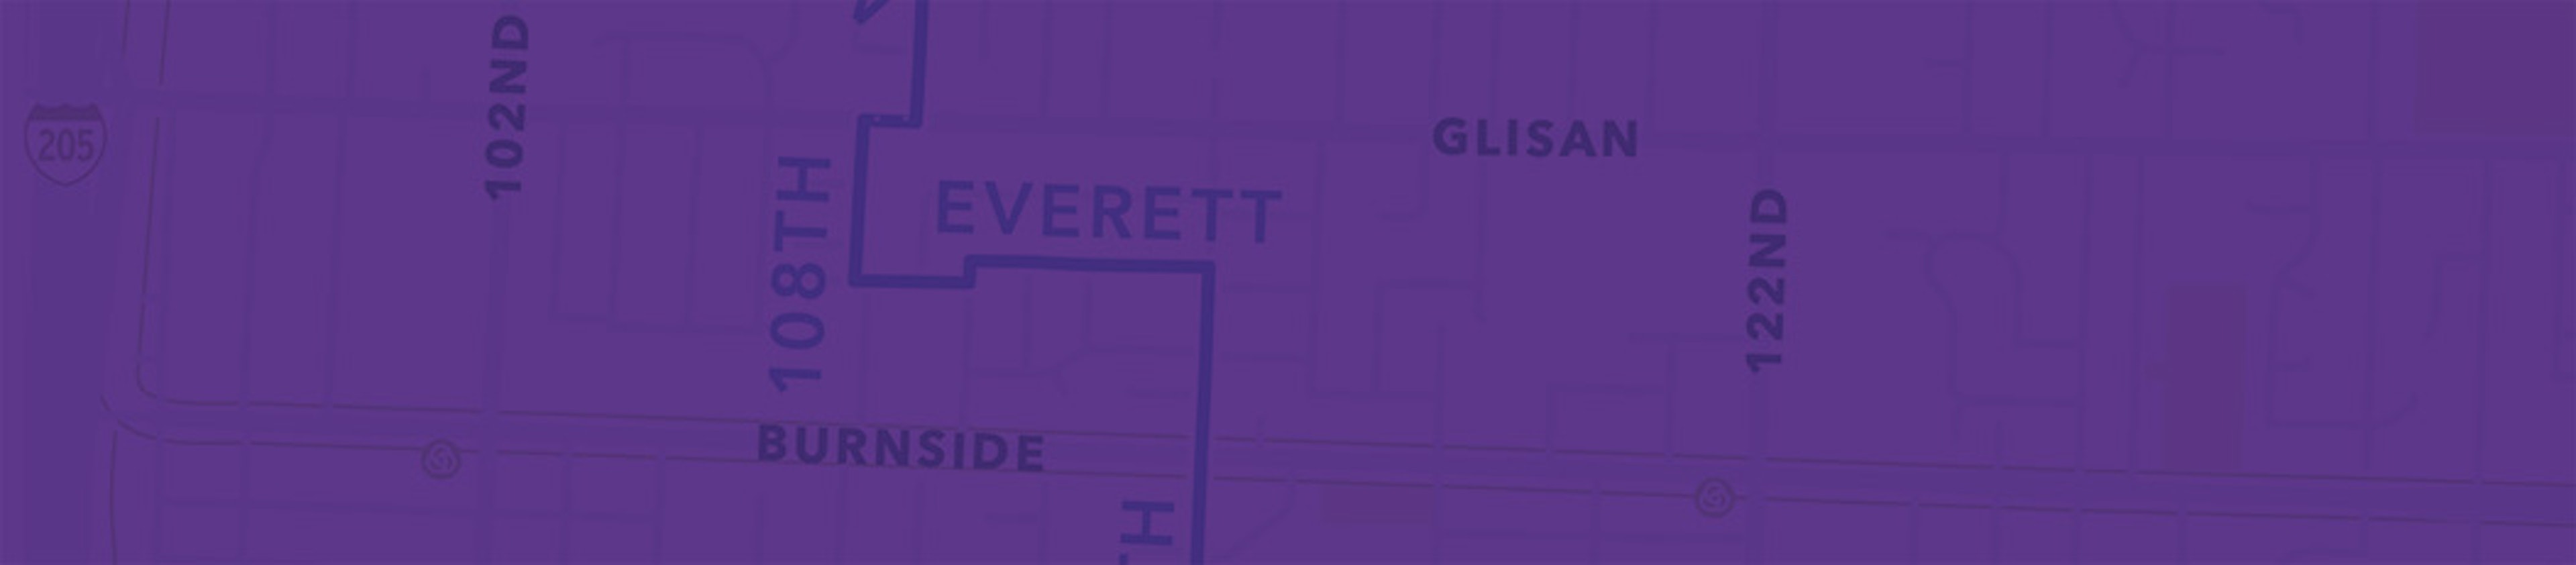 East map purple overlay image